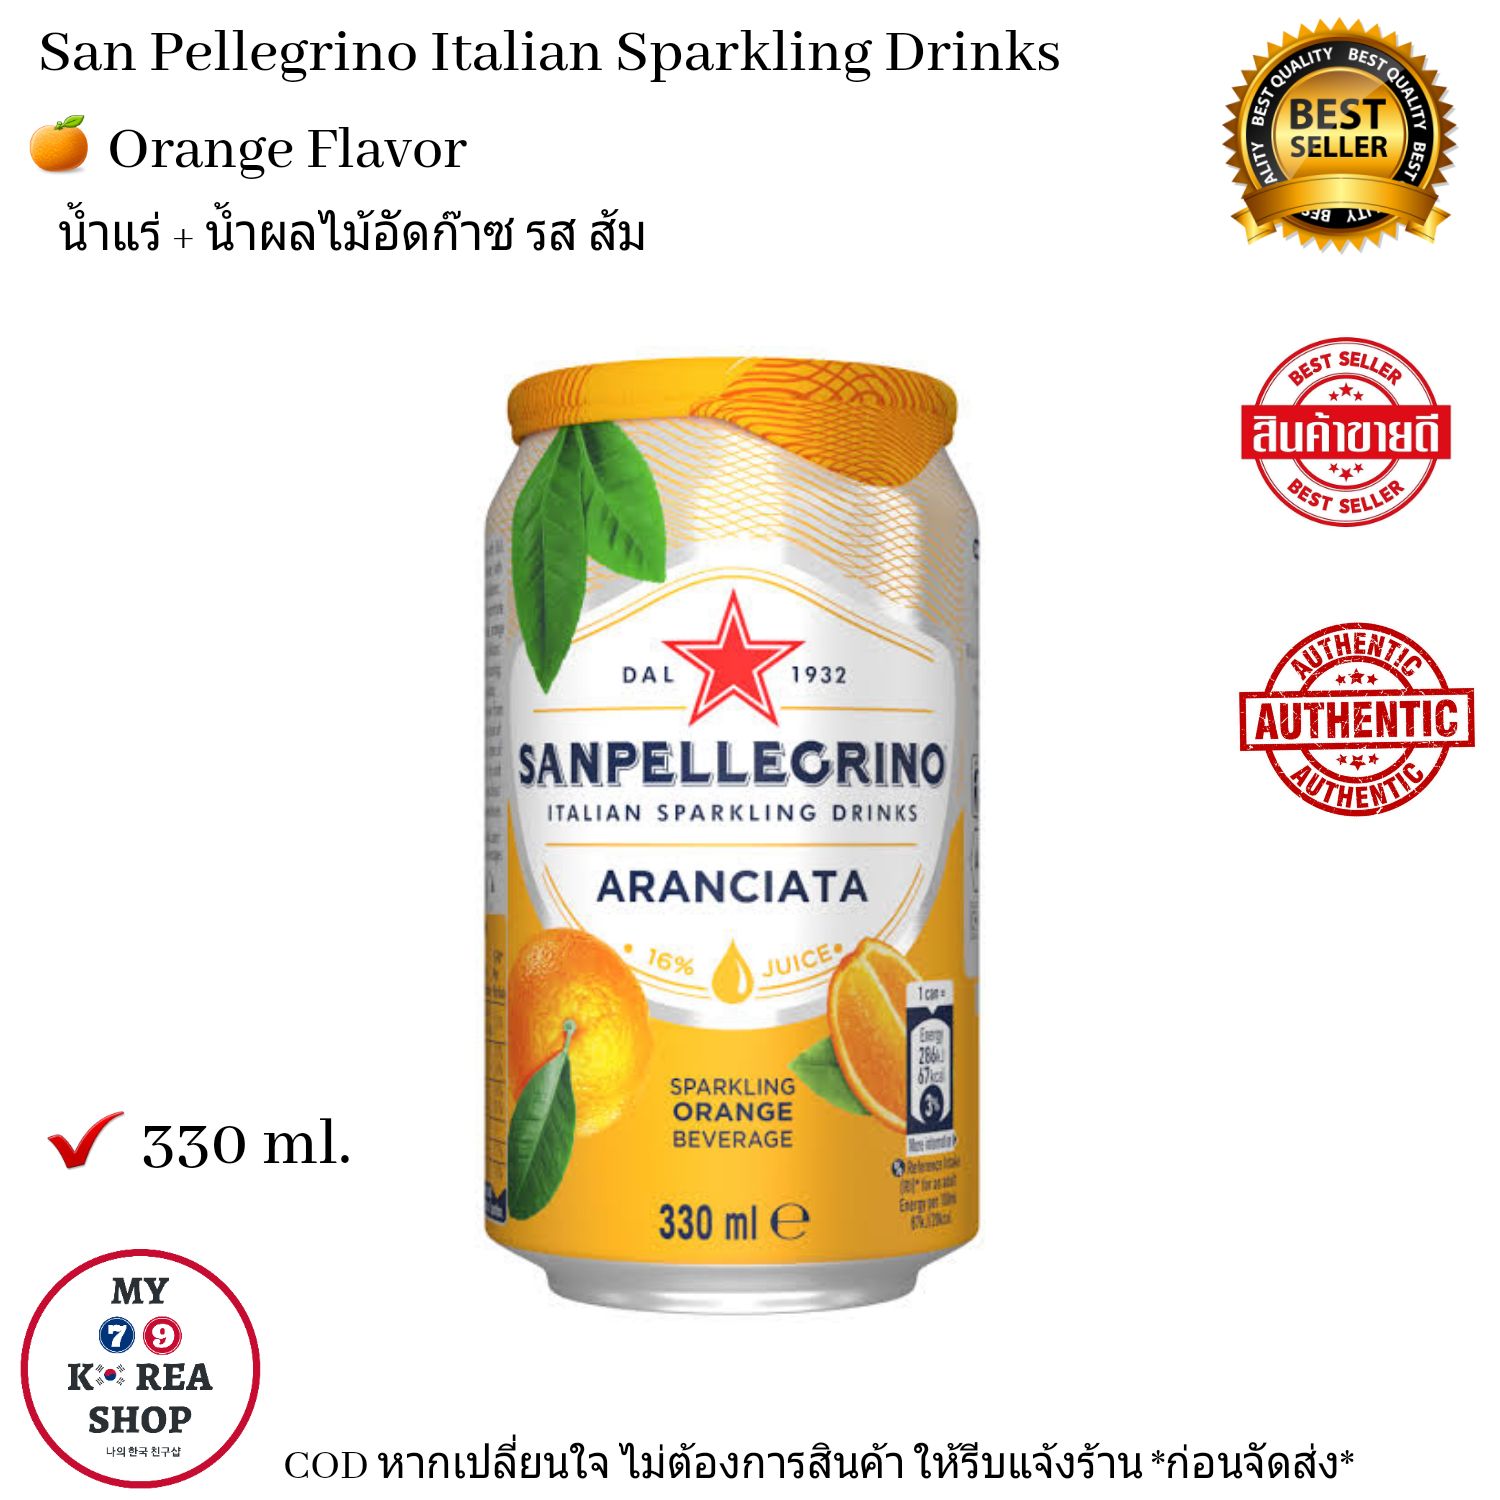 Sparkling Orange Beverage 330 ml. น้ำแร่ + น้ำผลไม้อัดก๊าซ รส ส้ม ( SanPellegrino )